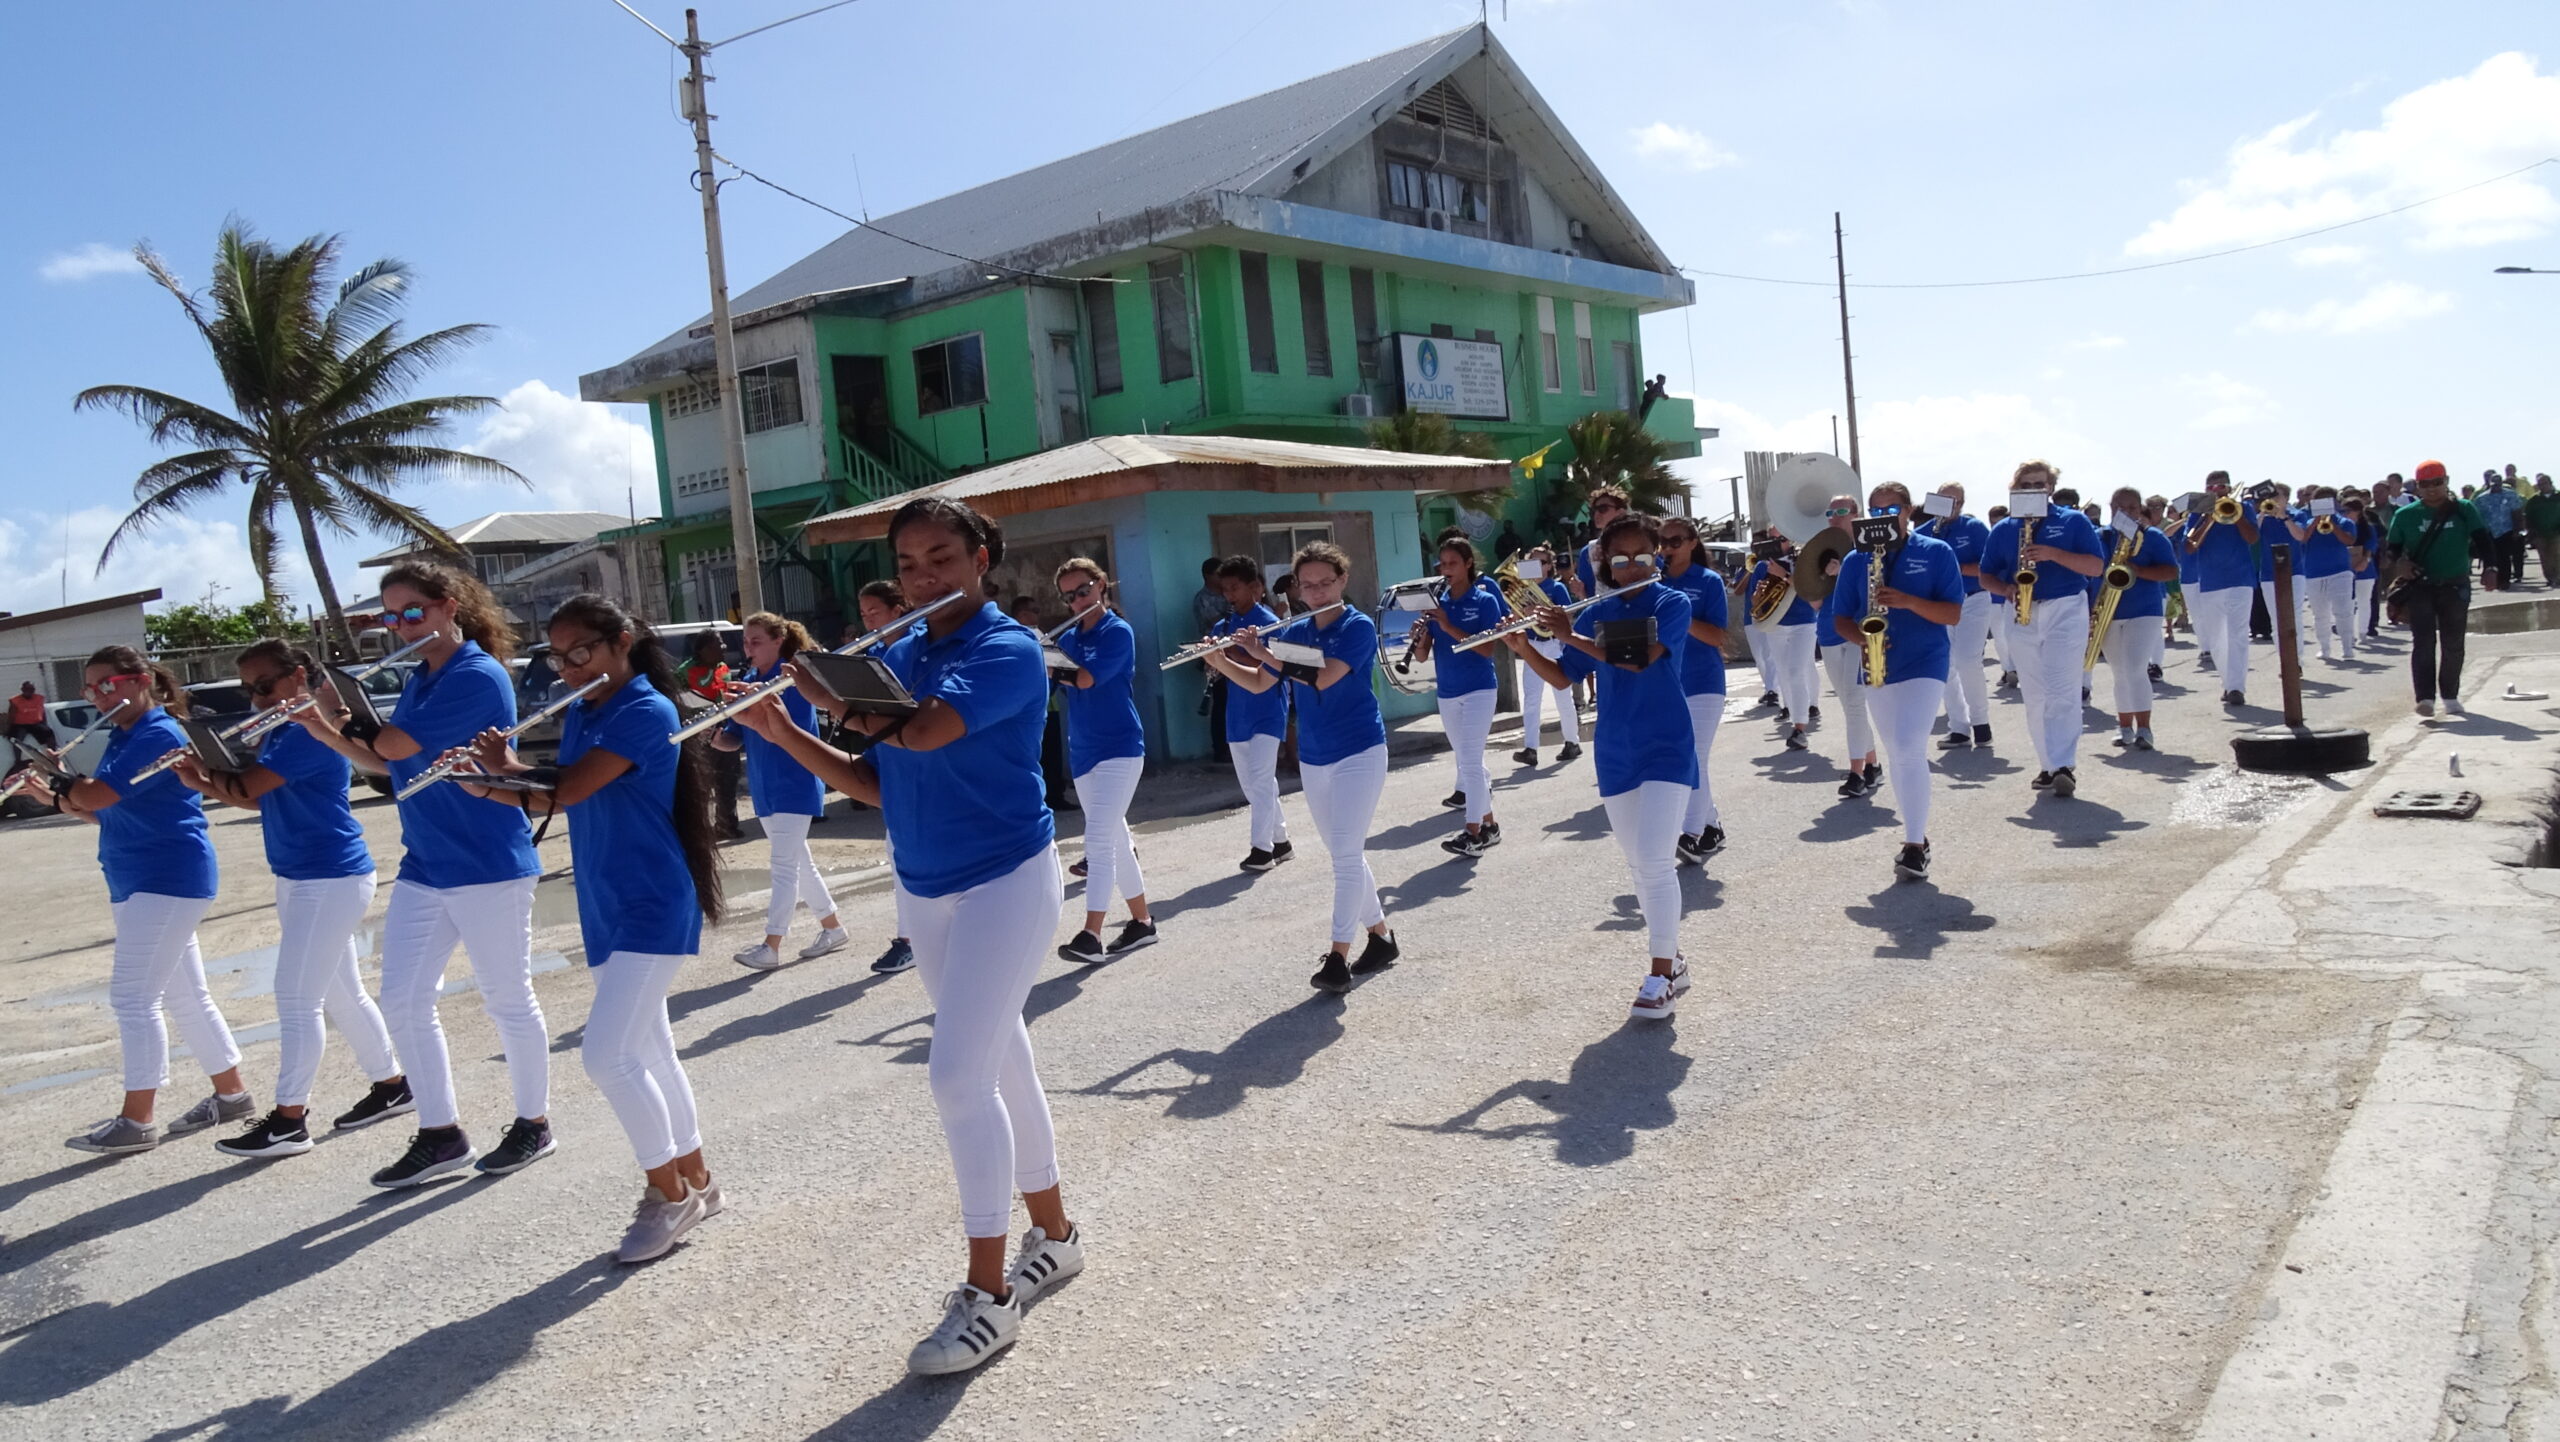 Kwajalein Day Kwaj HS marching band 2-9-21 EB DSC07047